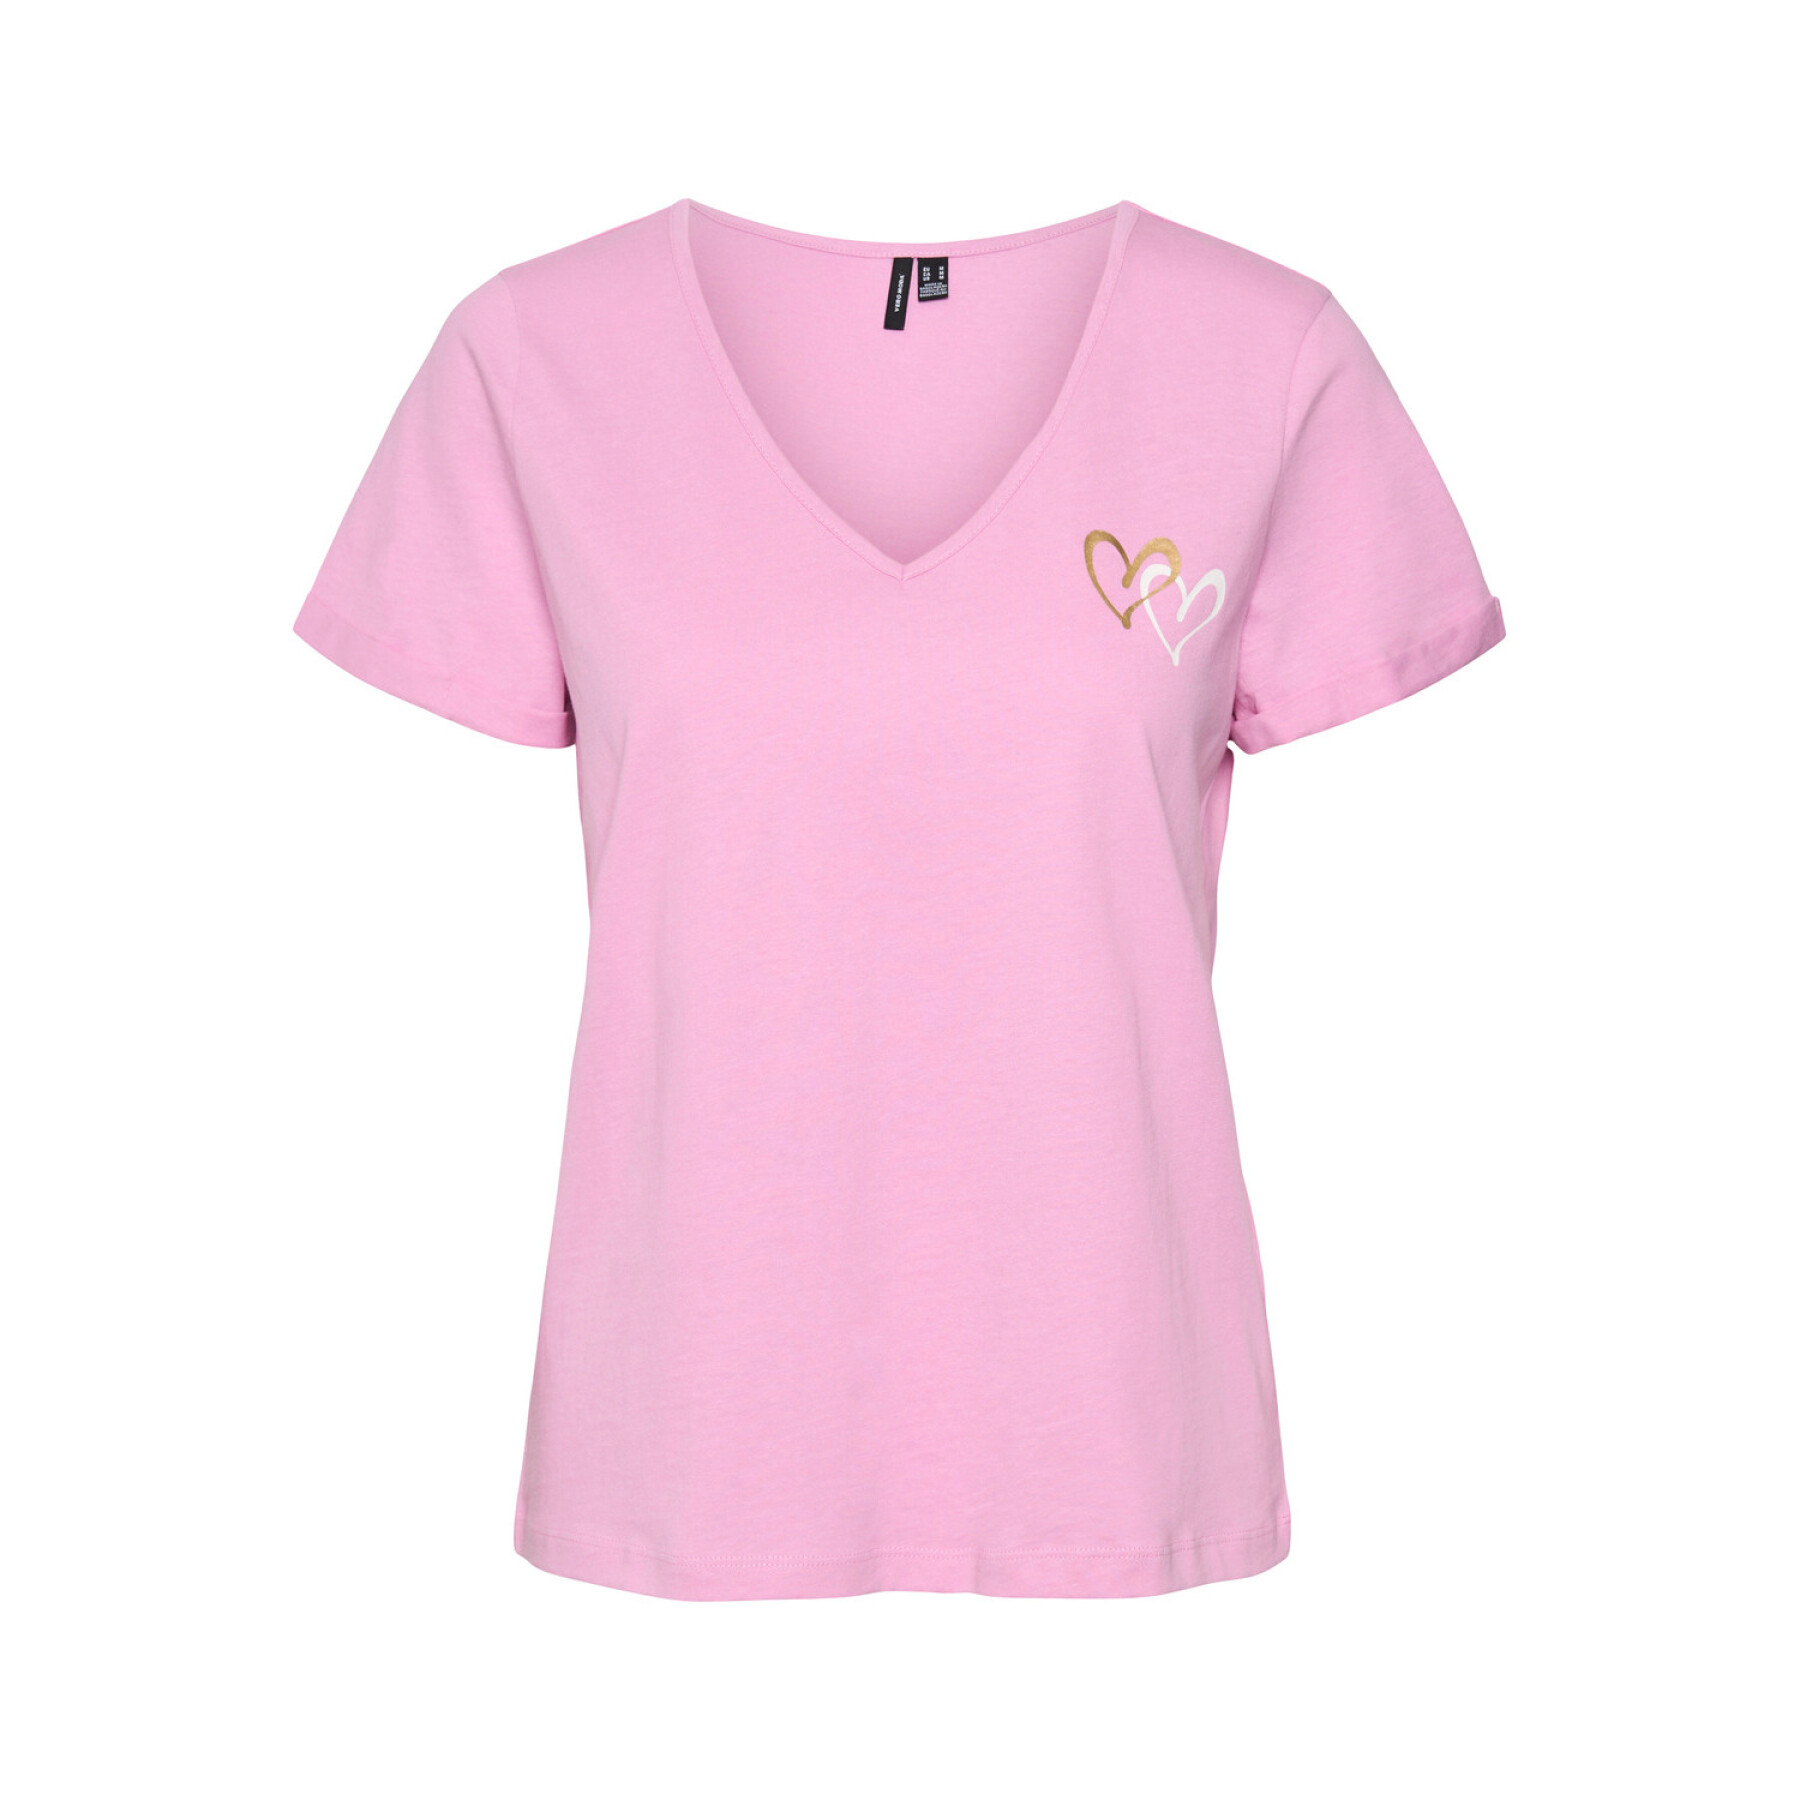 Girls' v-neck T-shirt Vero Moda Heart